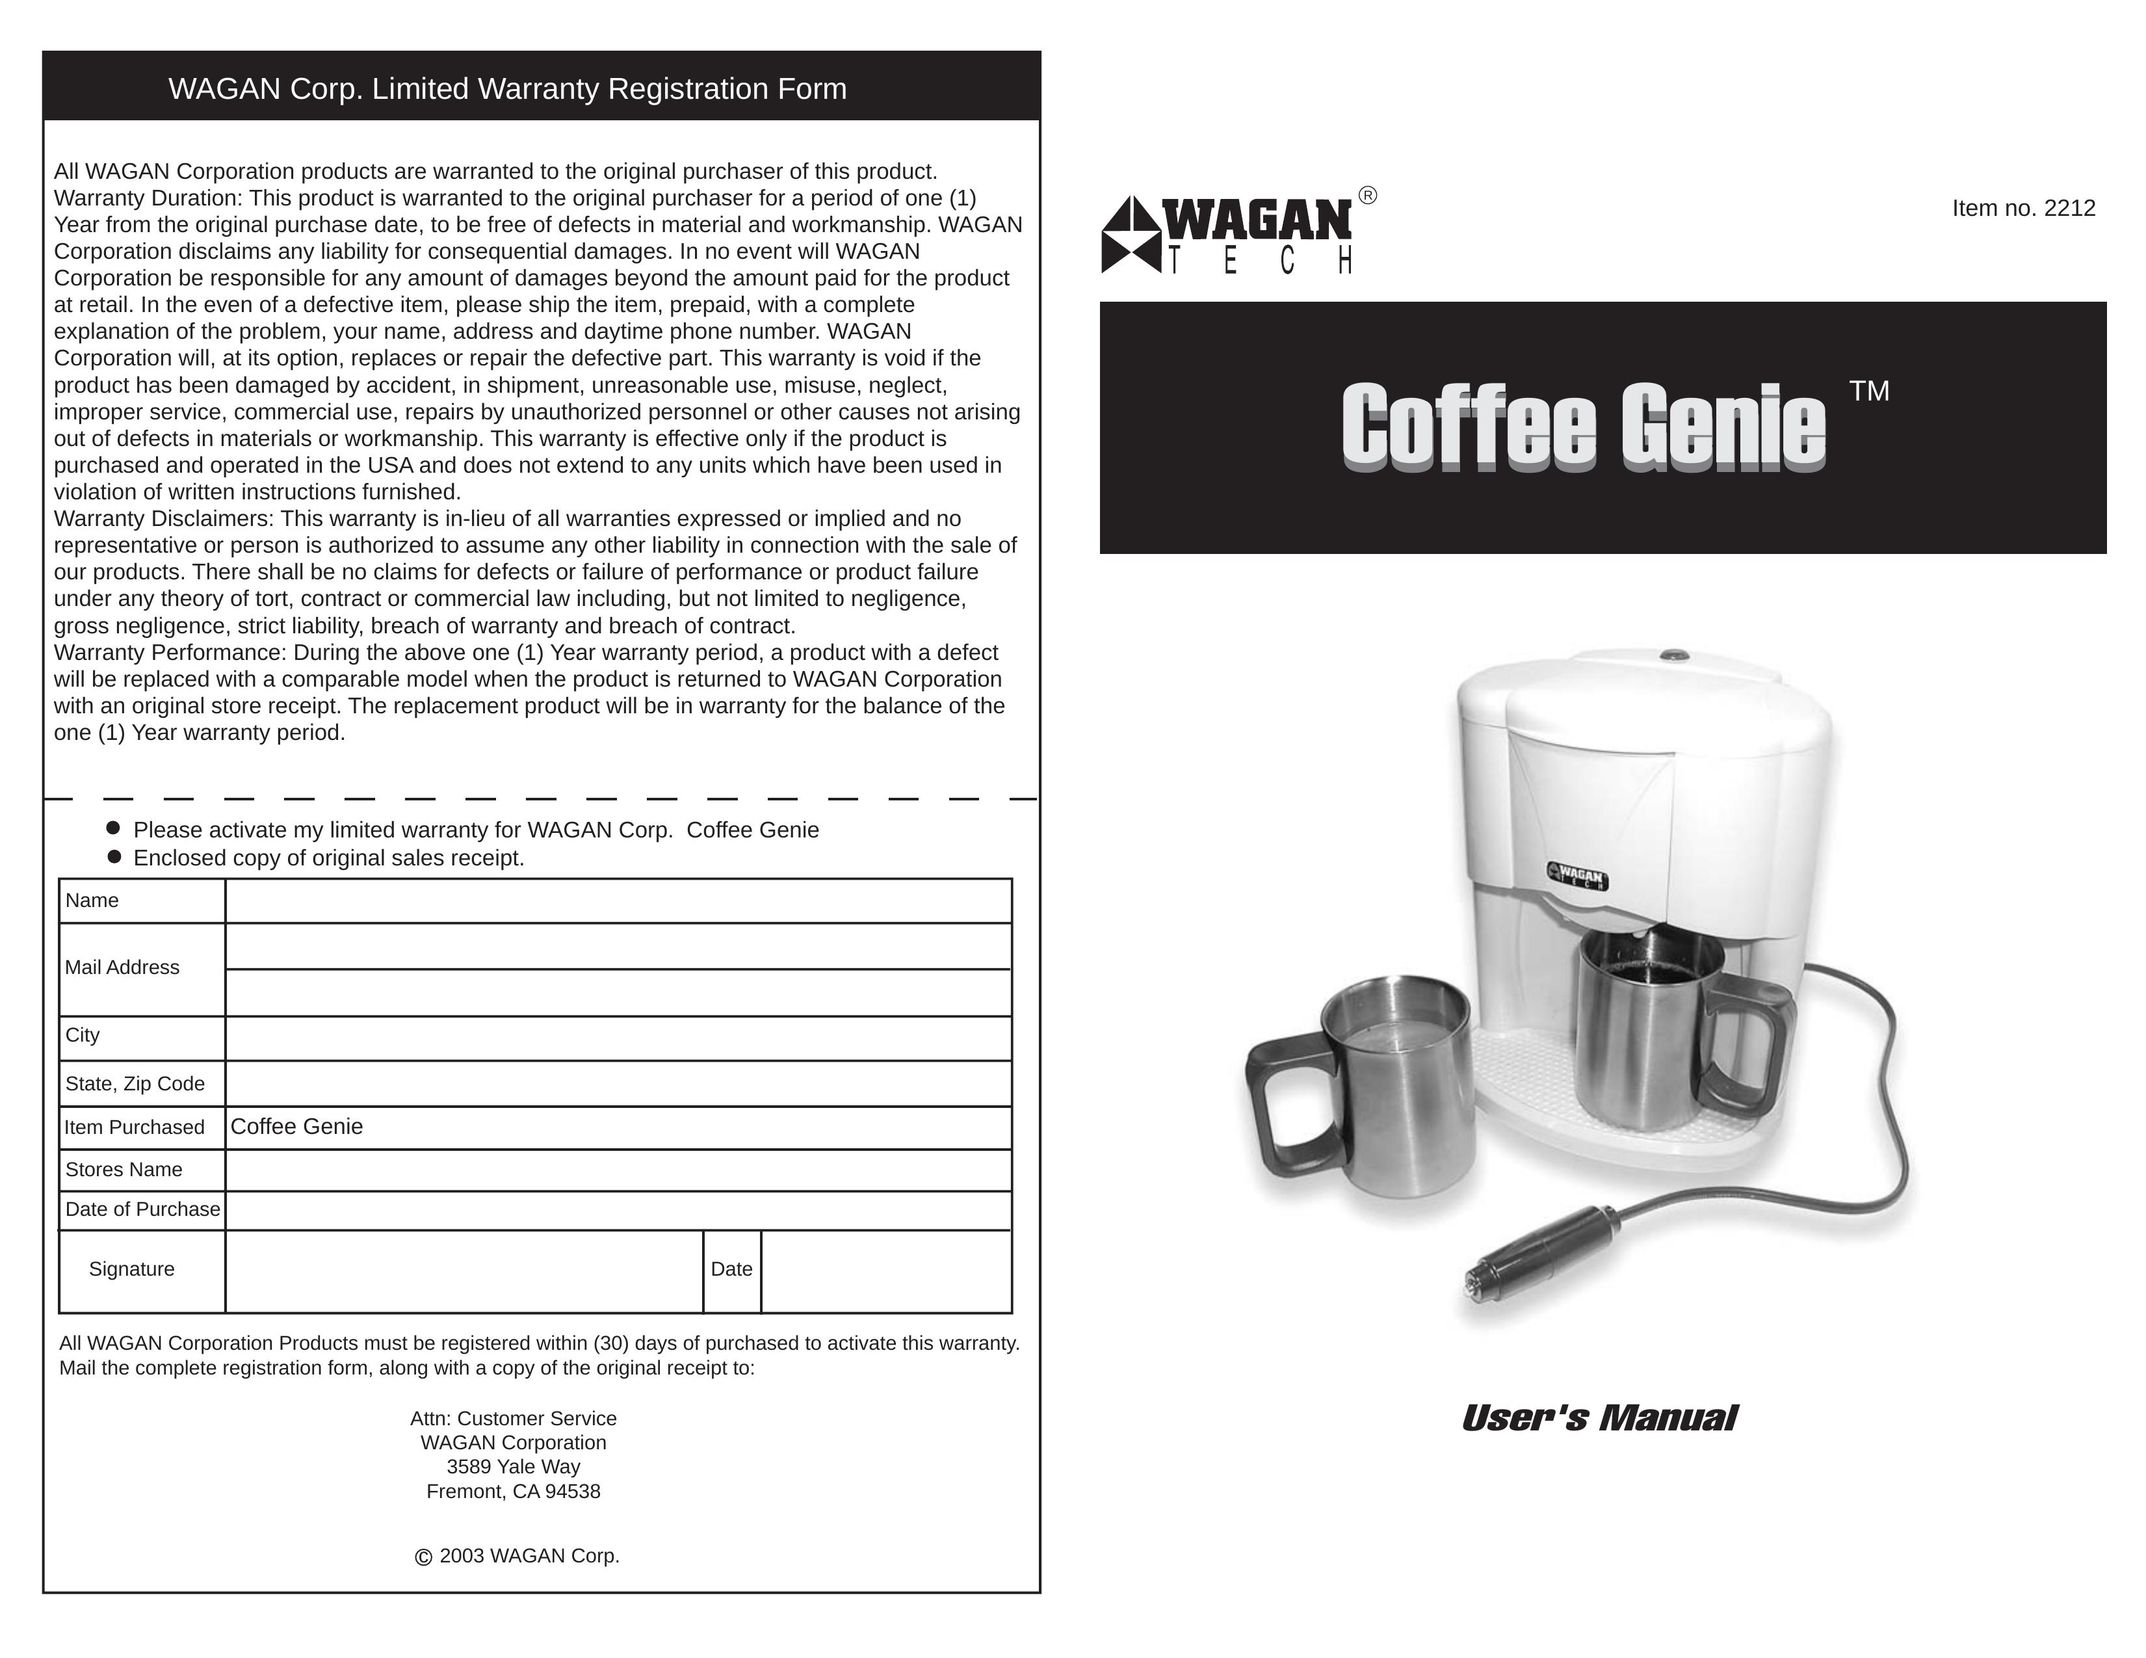 Wagan Coffee Genie Coffeemaker User Manual